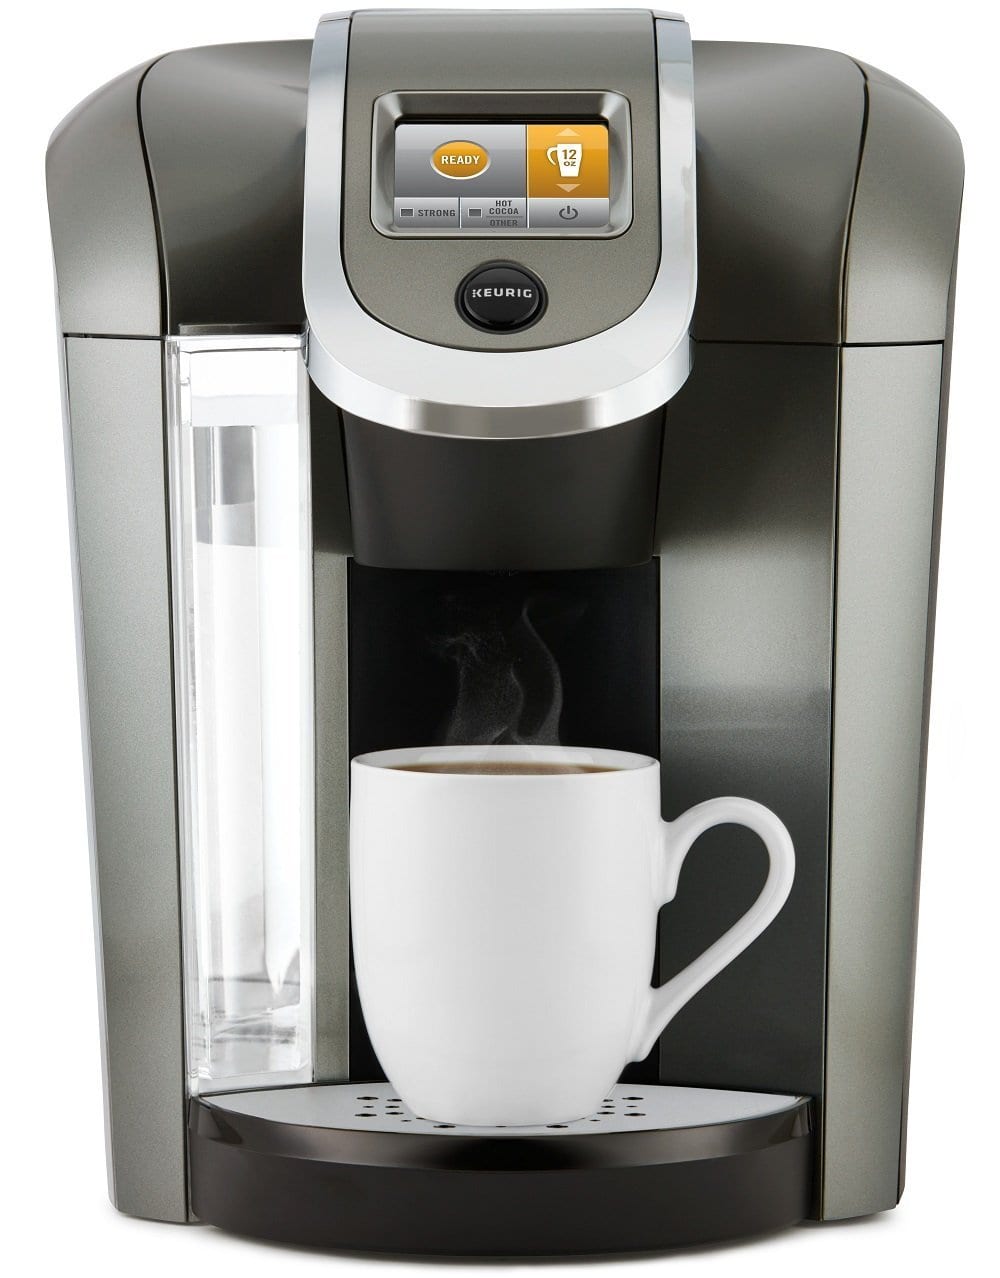 Best Coffee Makers 2017: Keurig Coffee Machine on Amazon 2018